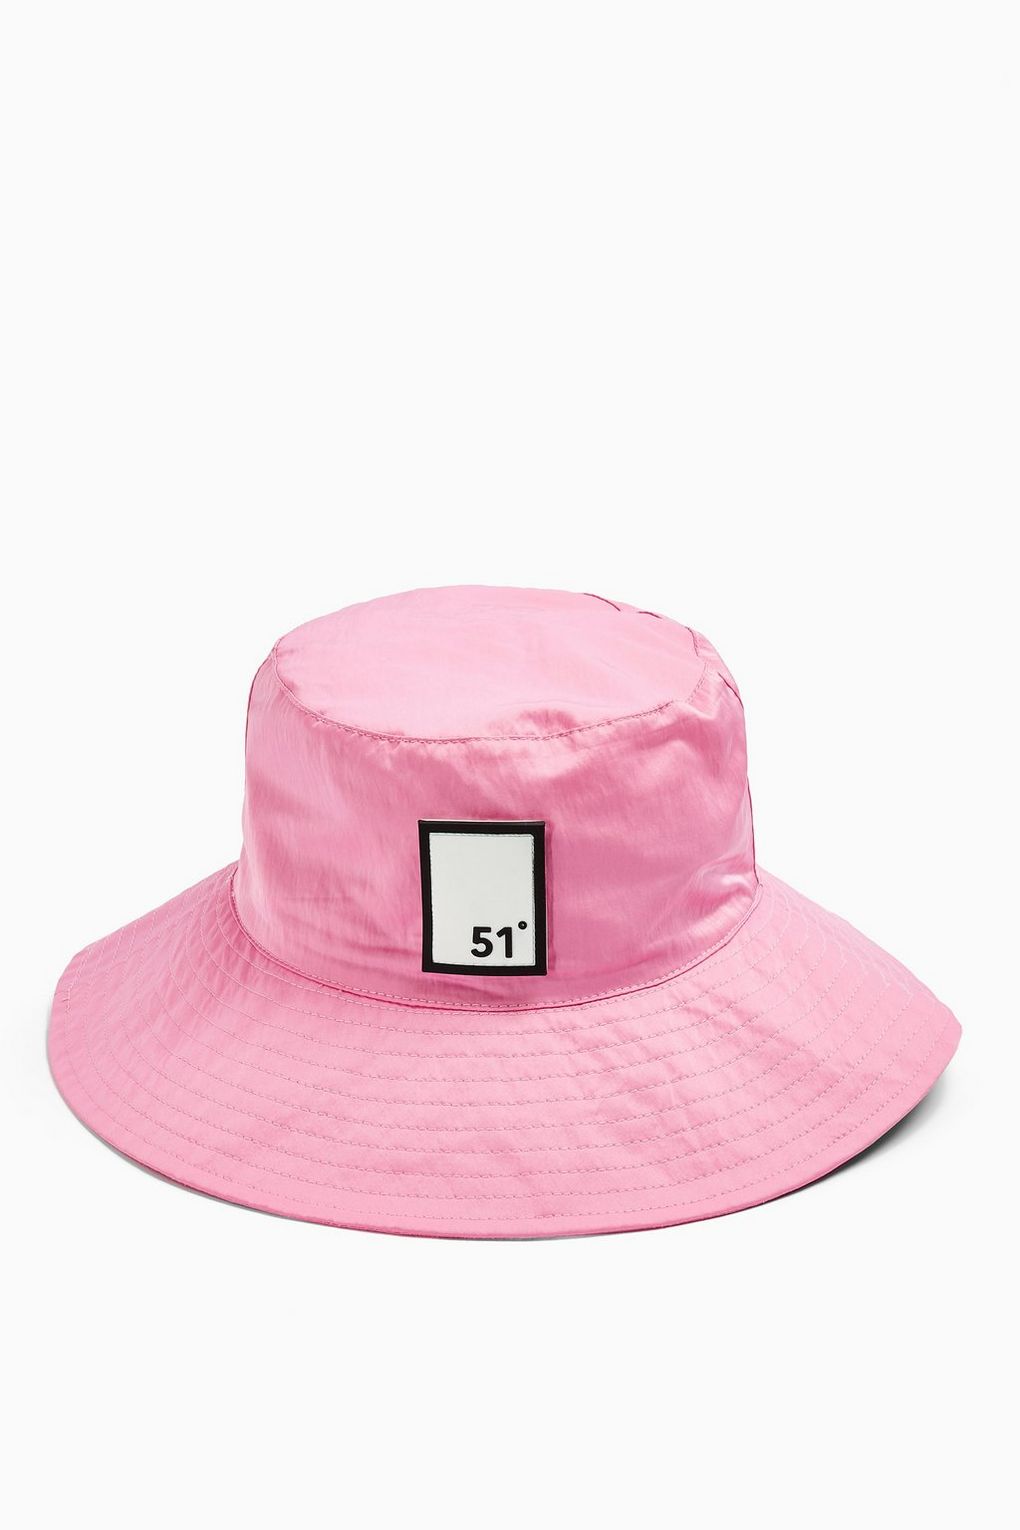 Want hats. Script Bucket hat розовая. Шляпа флоппи Розова. Script Bucket hat Carhartt WIP розовая. Script Bucket hat hot Pink hats.